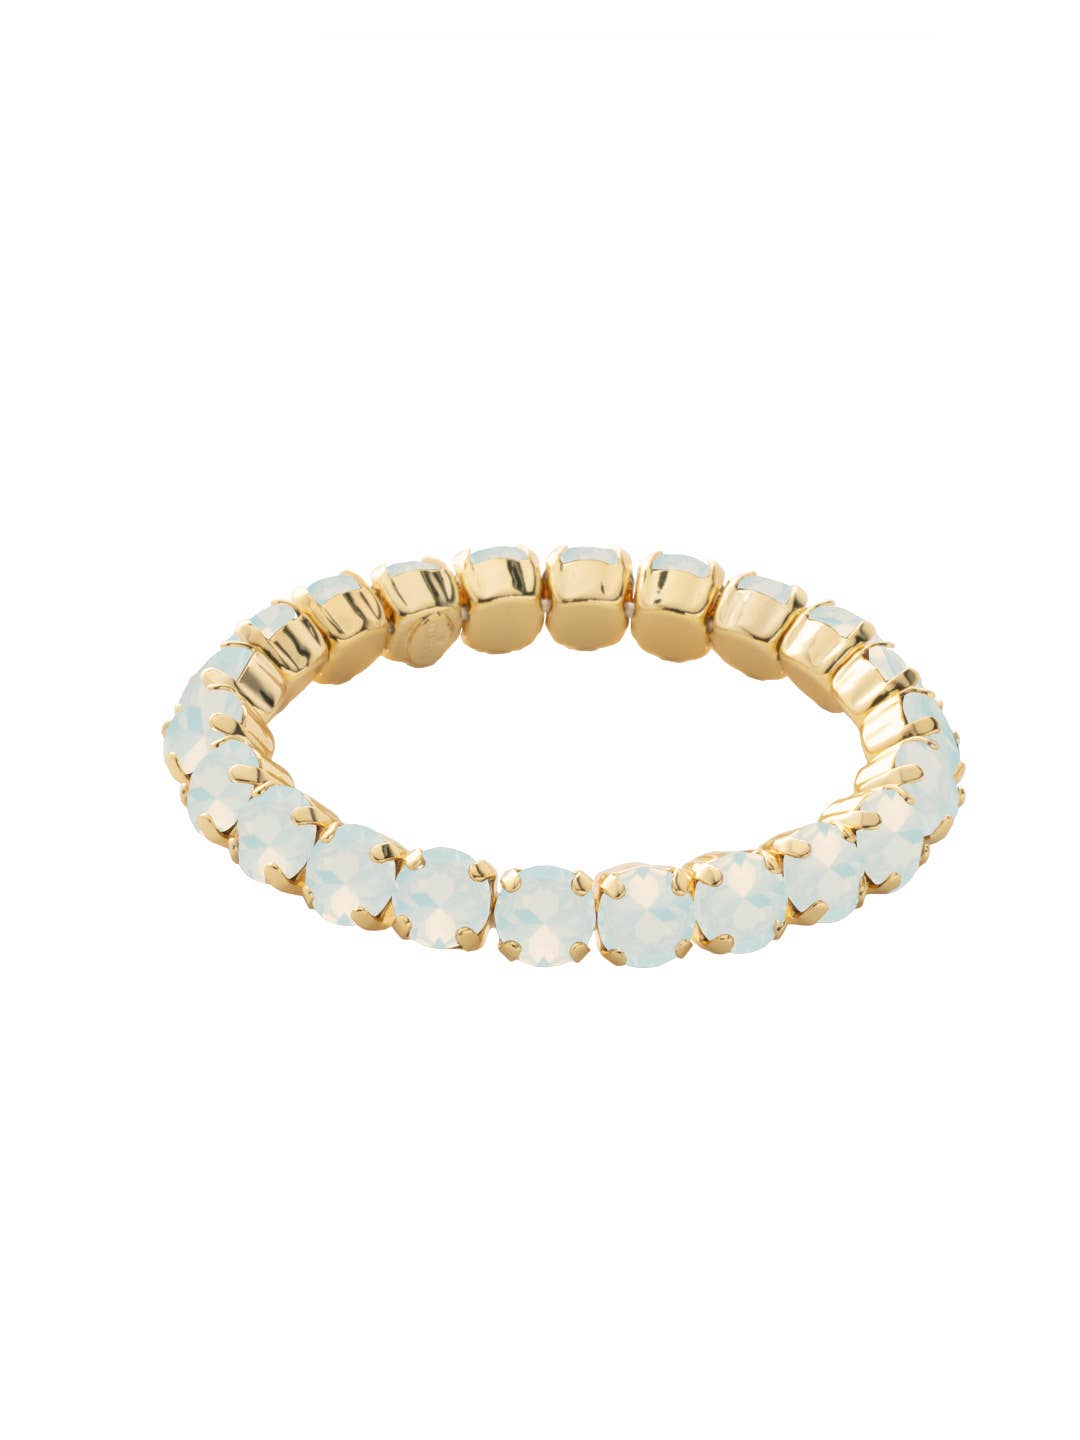 White Opal Crystal and 10K Gold Stretch Bracelet